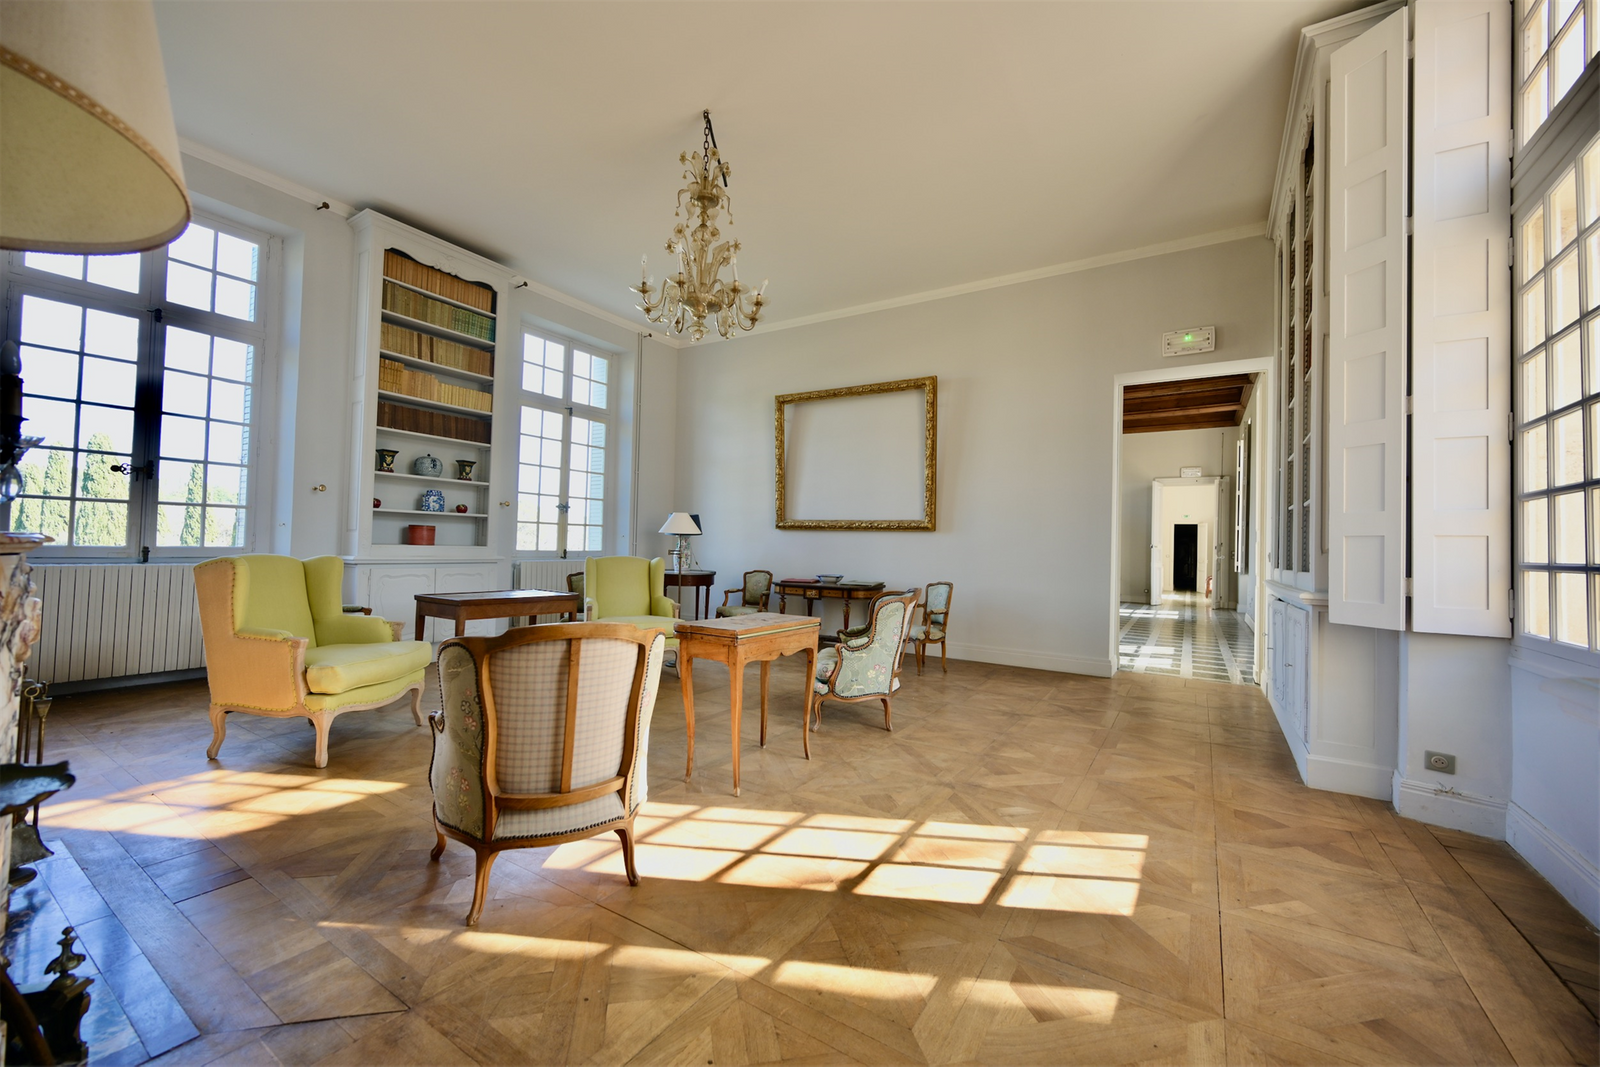 13. Vineyard Real Estate for Sale at Montpellier, Herault,34000 France